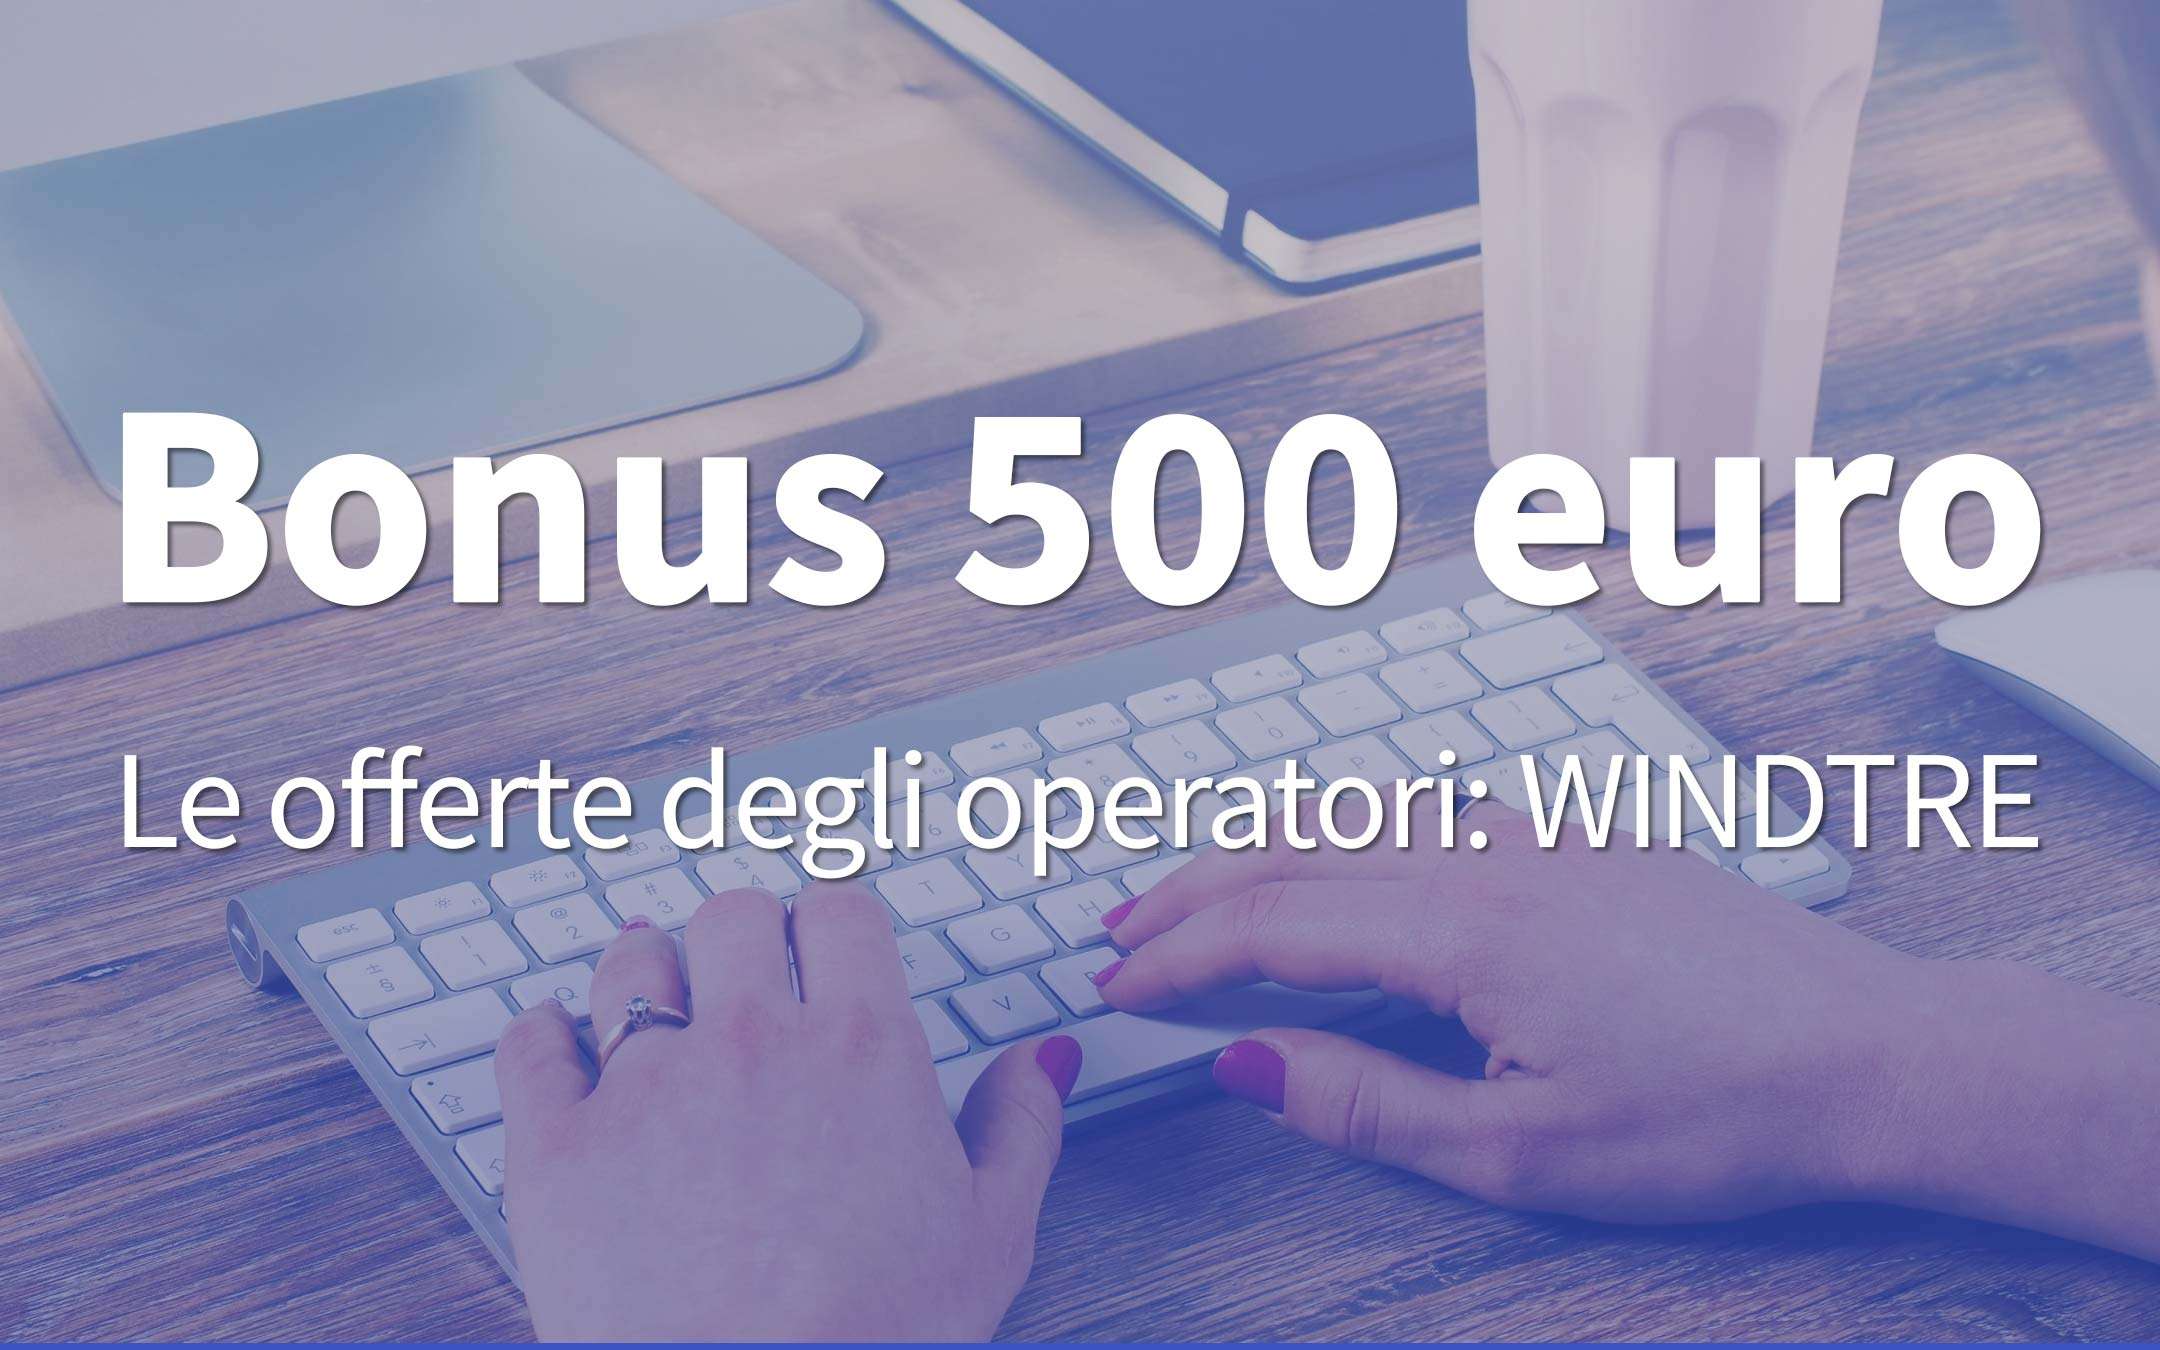 Bonus 500 euro: la pagina per l'offerta di WINDTRE